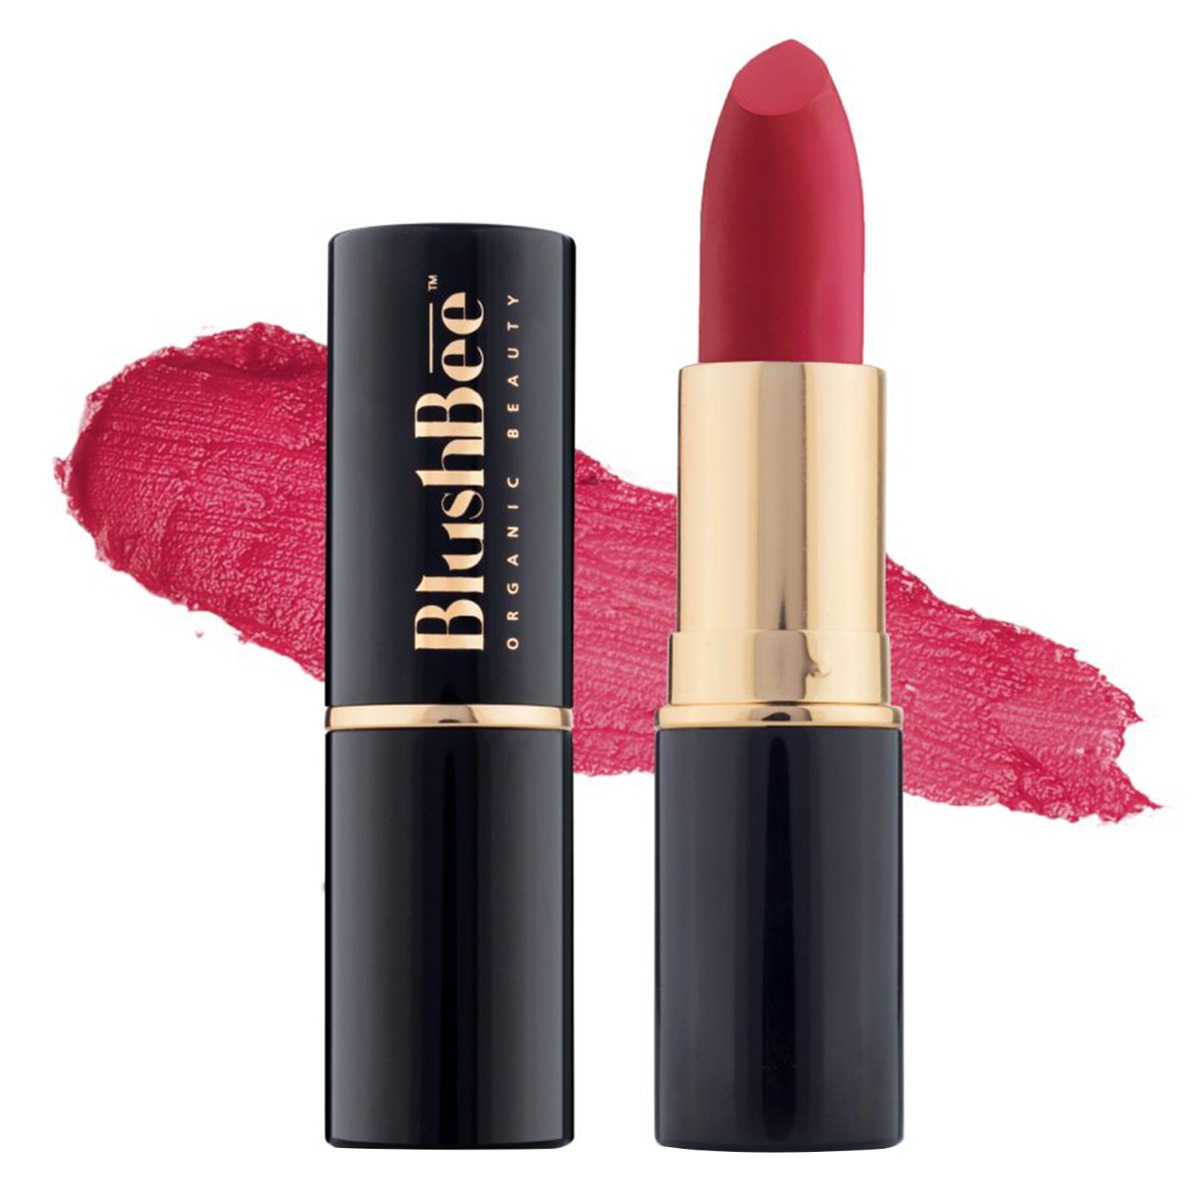 BlushBee Organic Beauty Lip Nourishing Organic Vegan Lipstick, 4.2gm-Flamengo Red